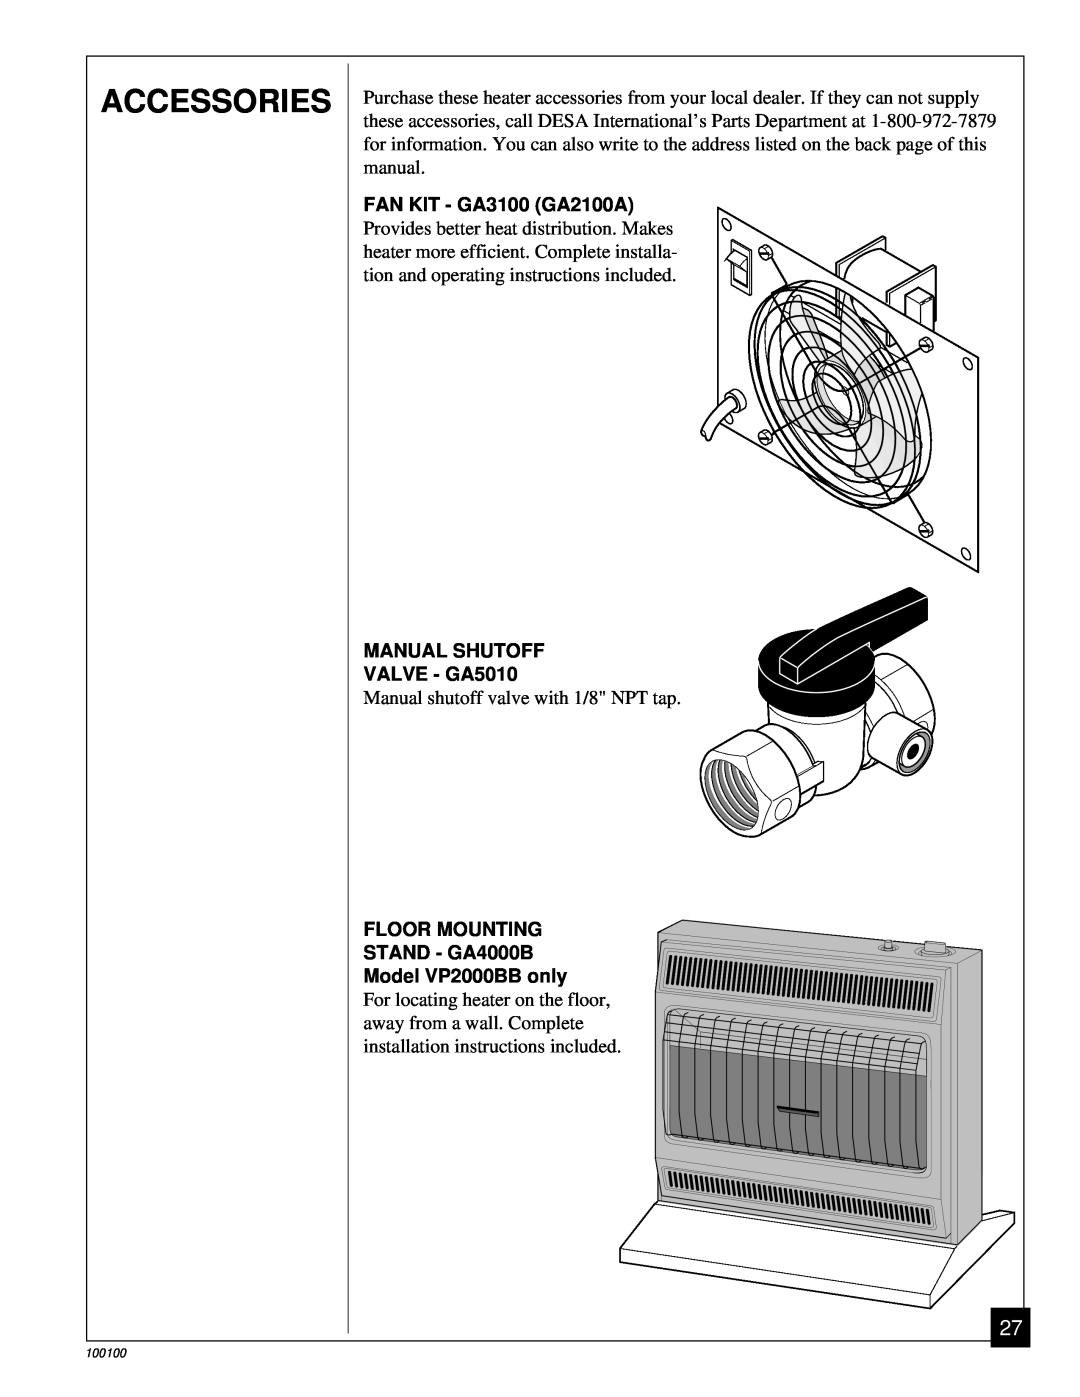 Vanguard Heating VGP30B Accessories, FAN KIT - GA3100 GA2100A, MANUAL SHUTOFF VALVE - GA5010, Model VP2000BB only 